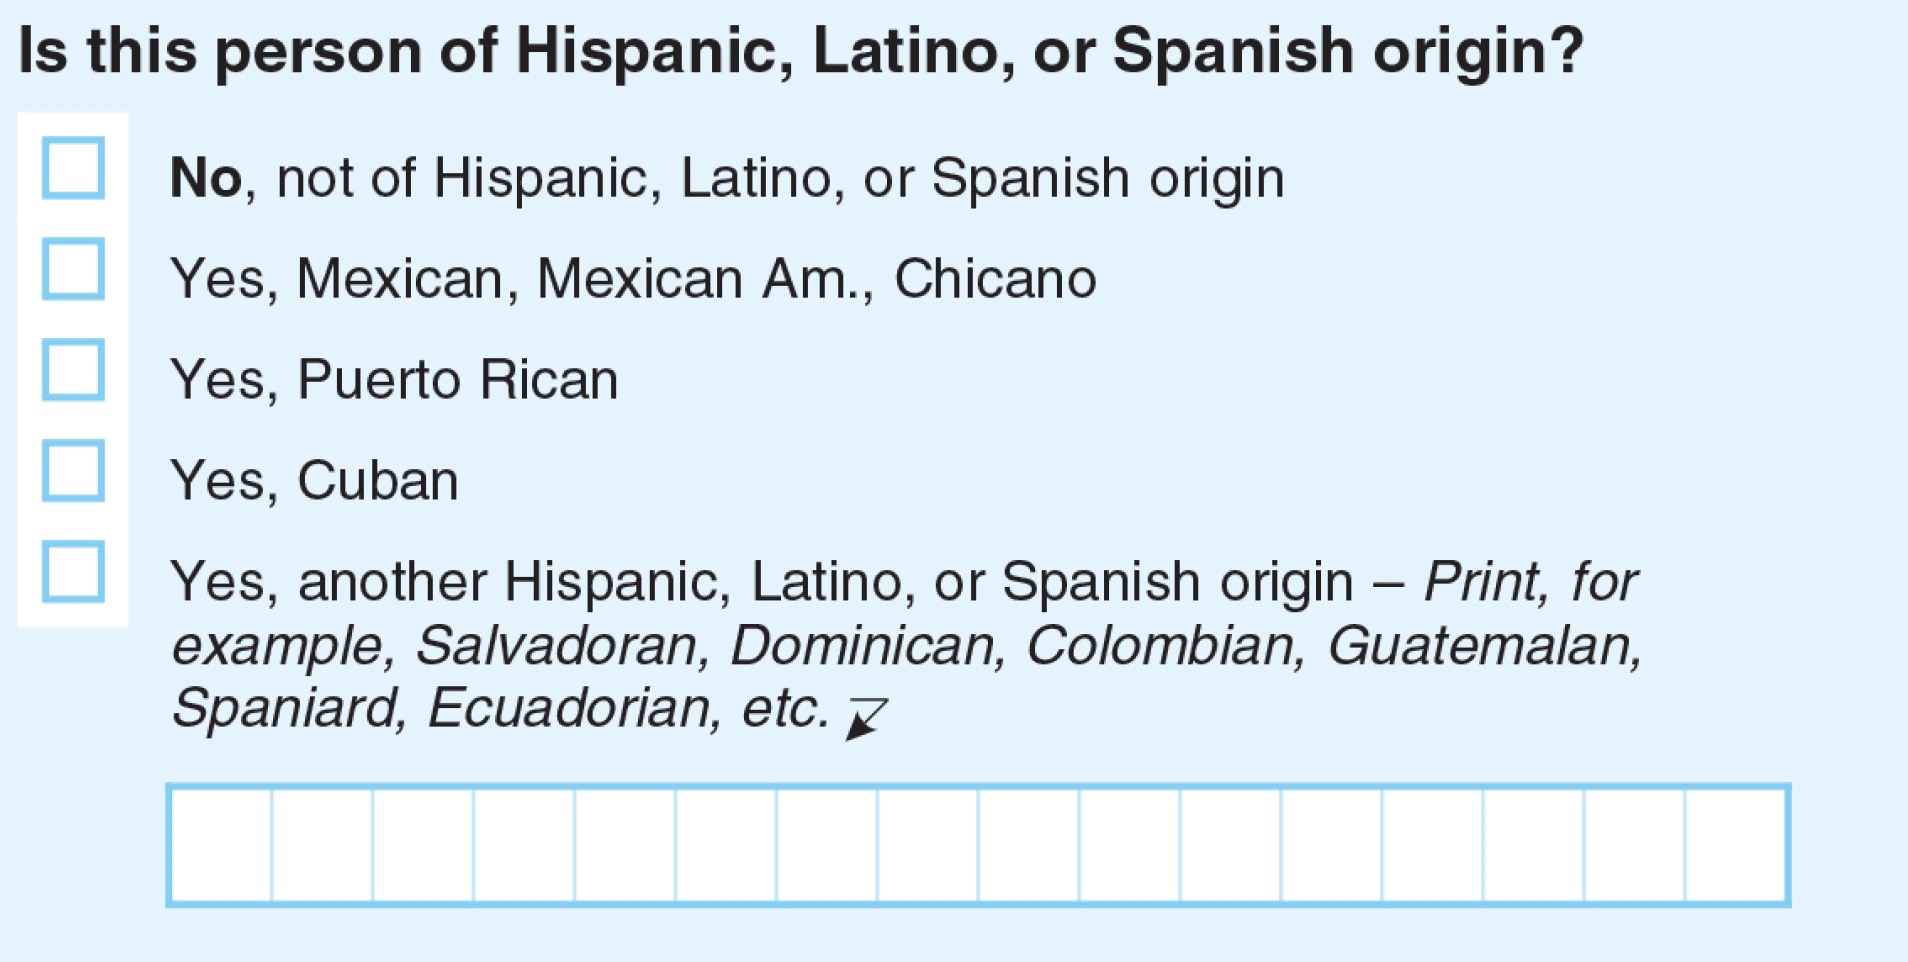 Census question: Is this person of Hispanic, Latino, or Spanish origin?